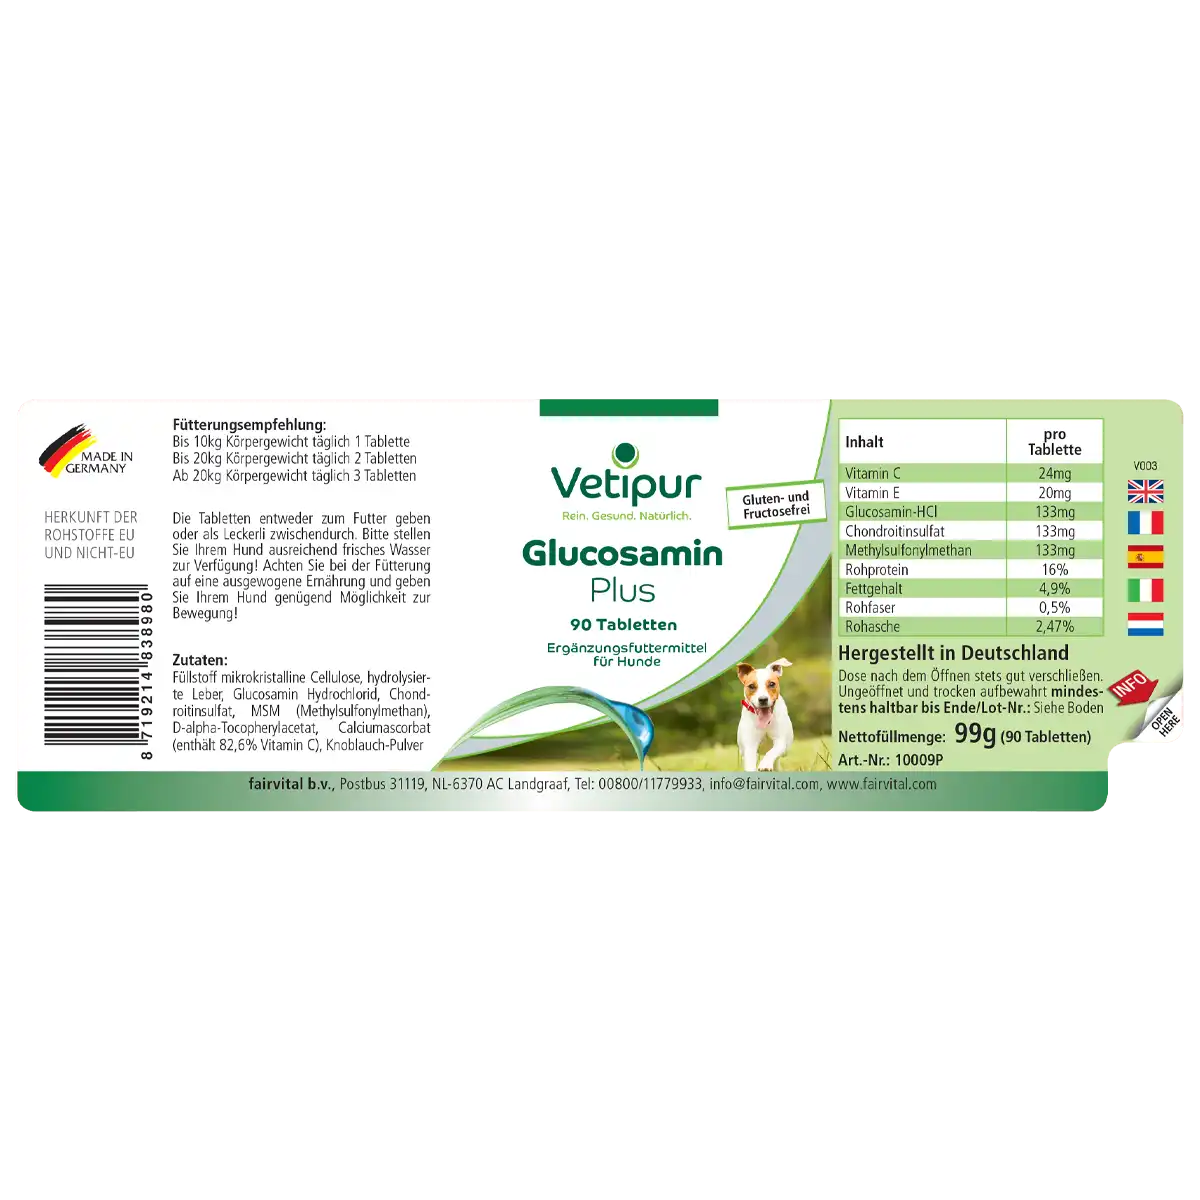 Glucosamine Plus - 90 tabletten voor honden | Vetipur